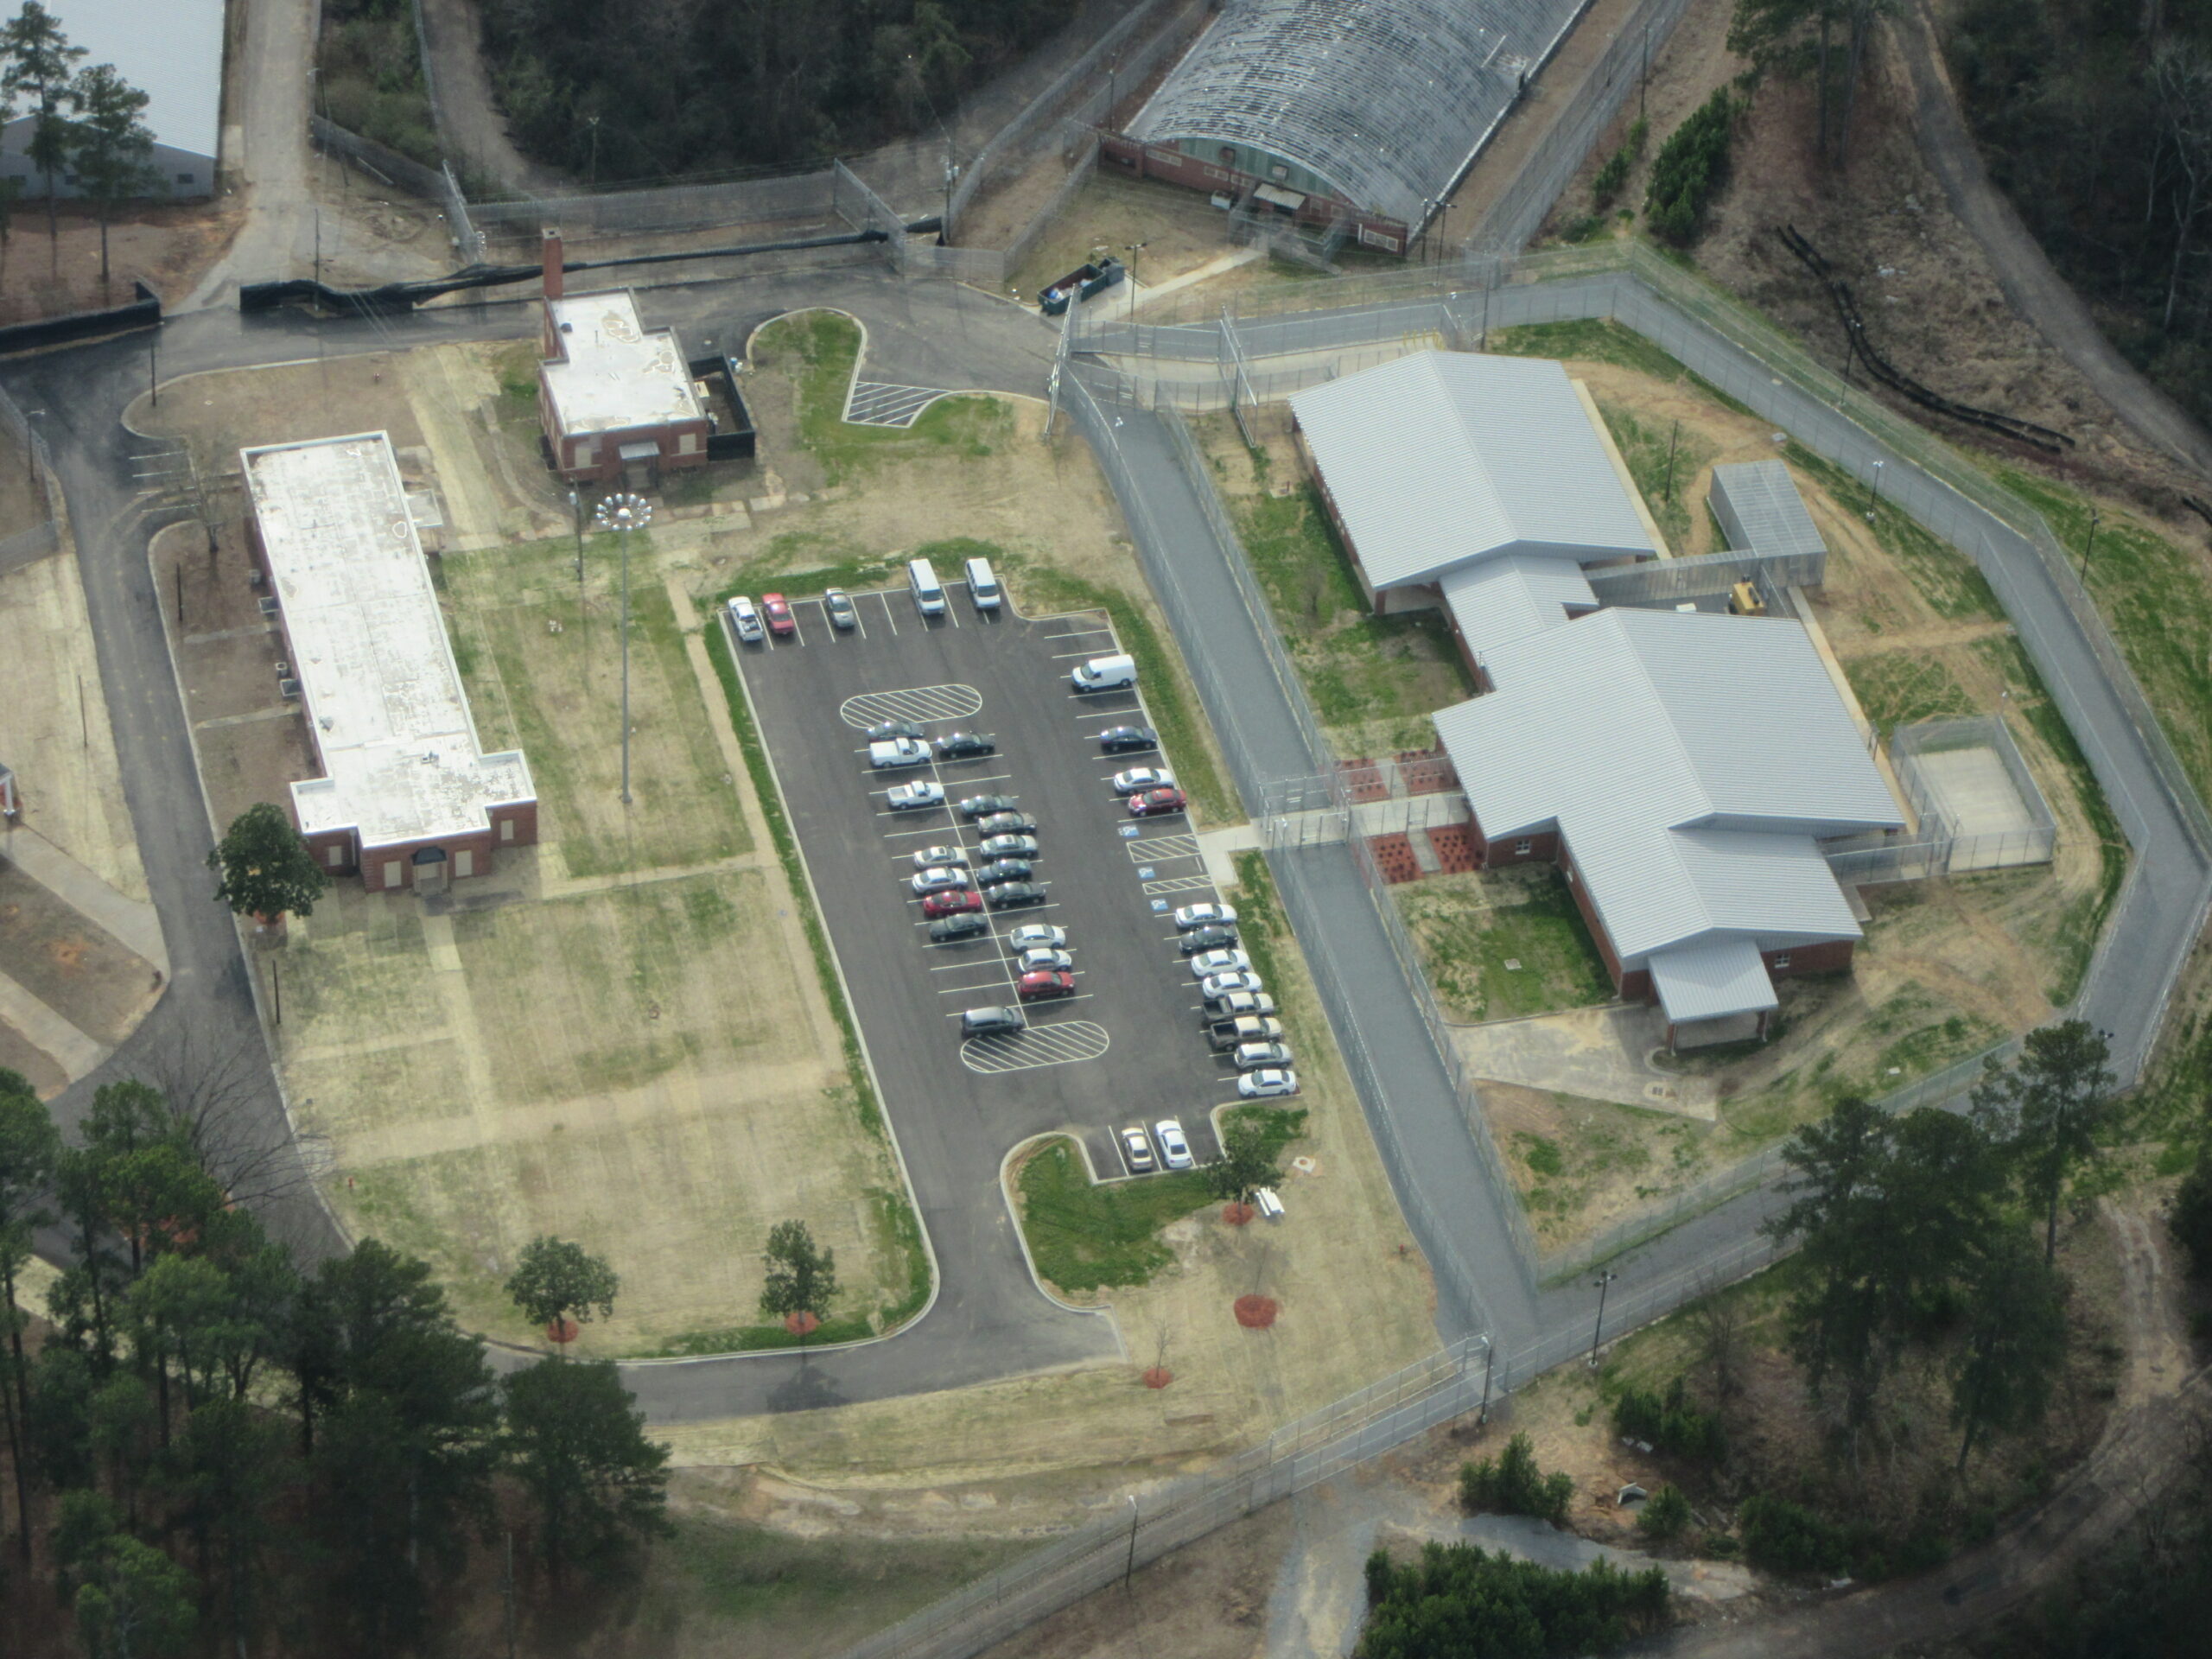 Georgia Department of Juvenile Justice – Bill E. Ireland YDC Facility in Milledgeville, Georgia